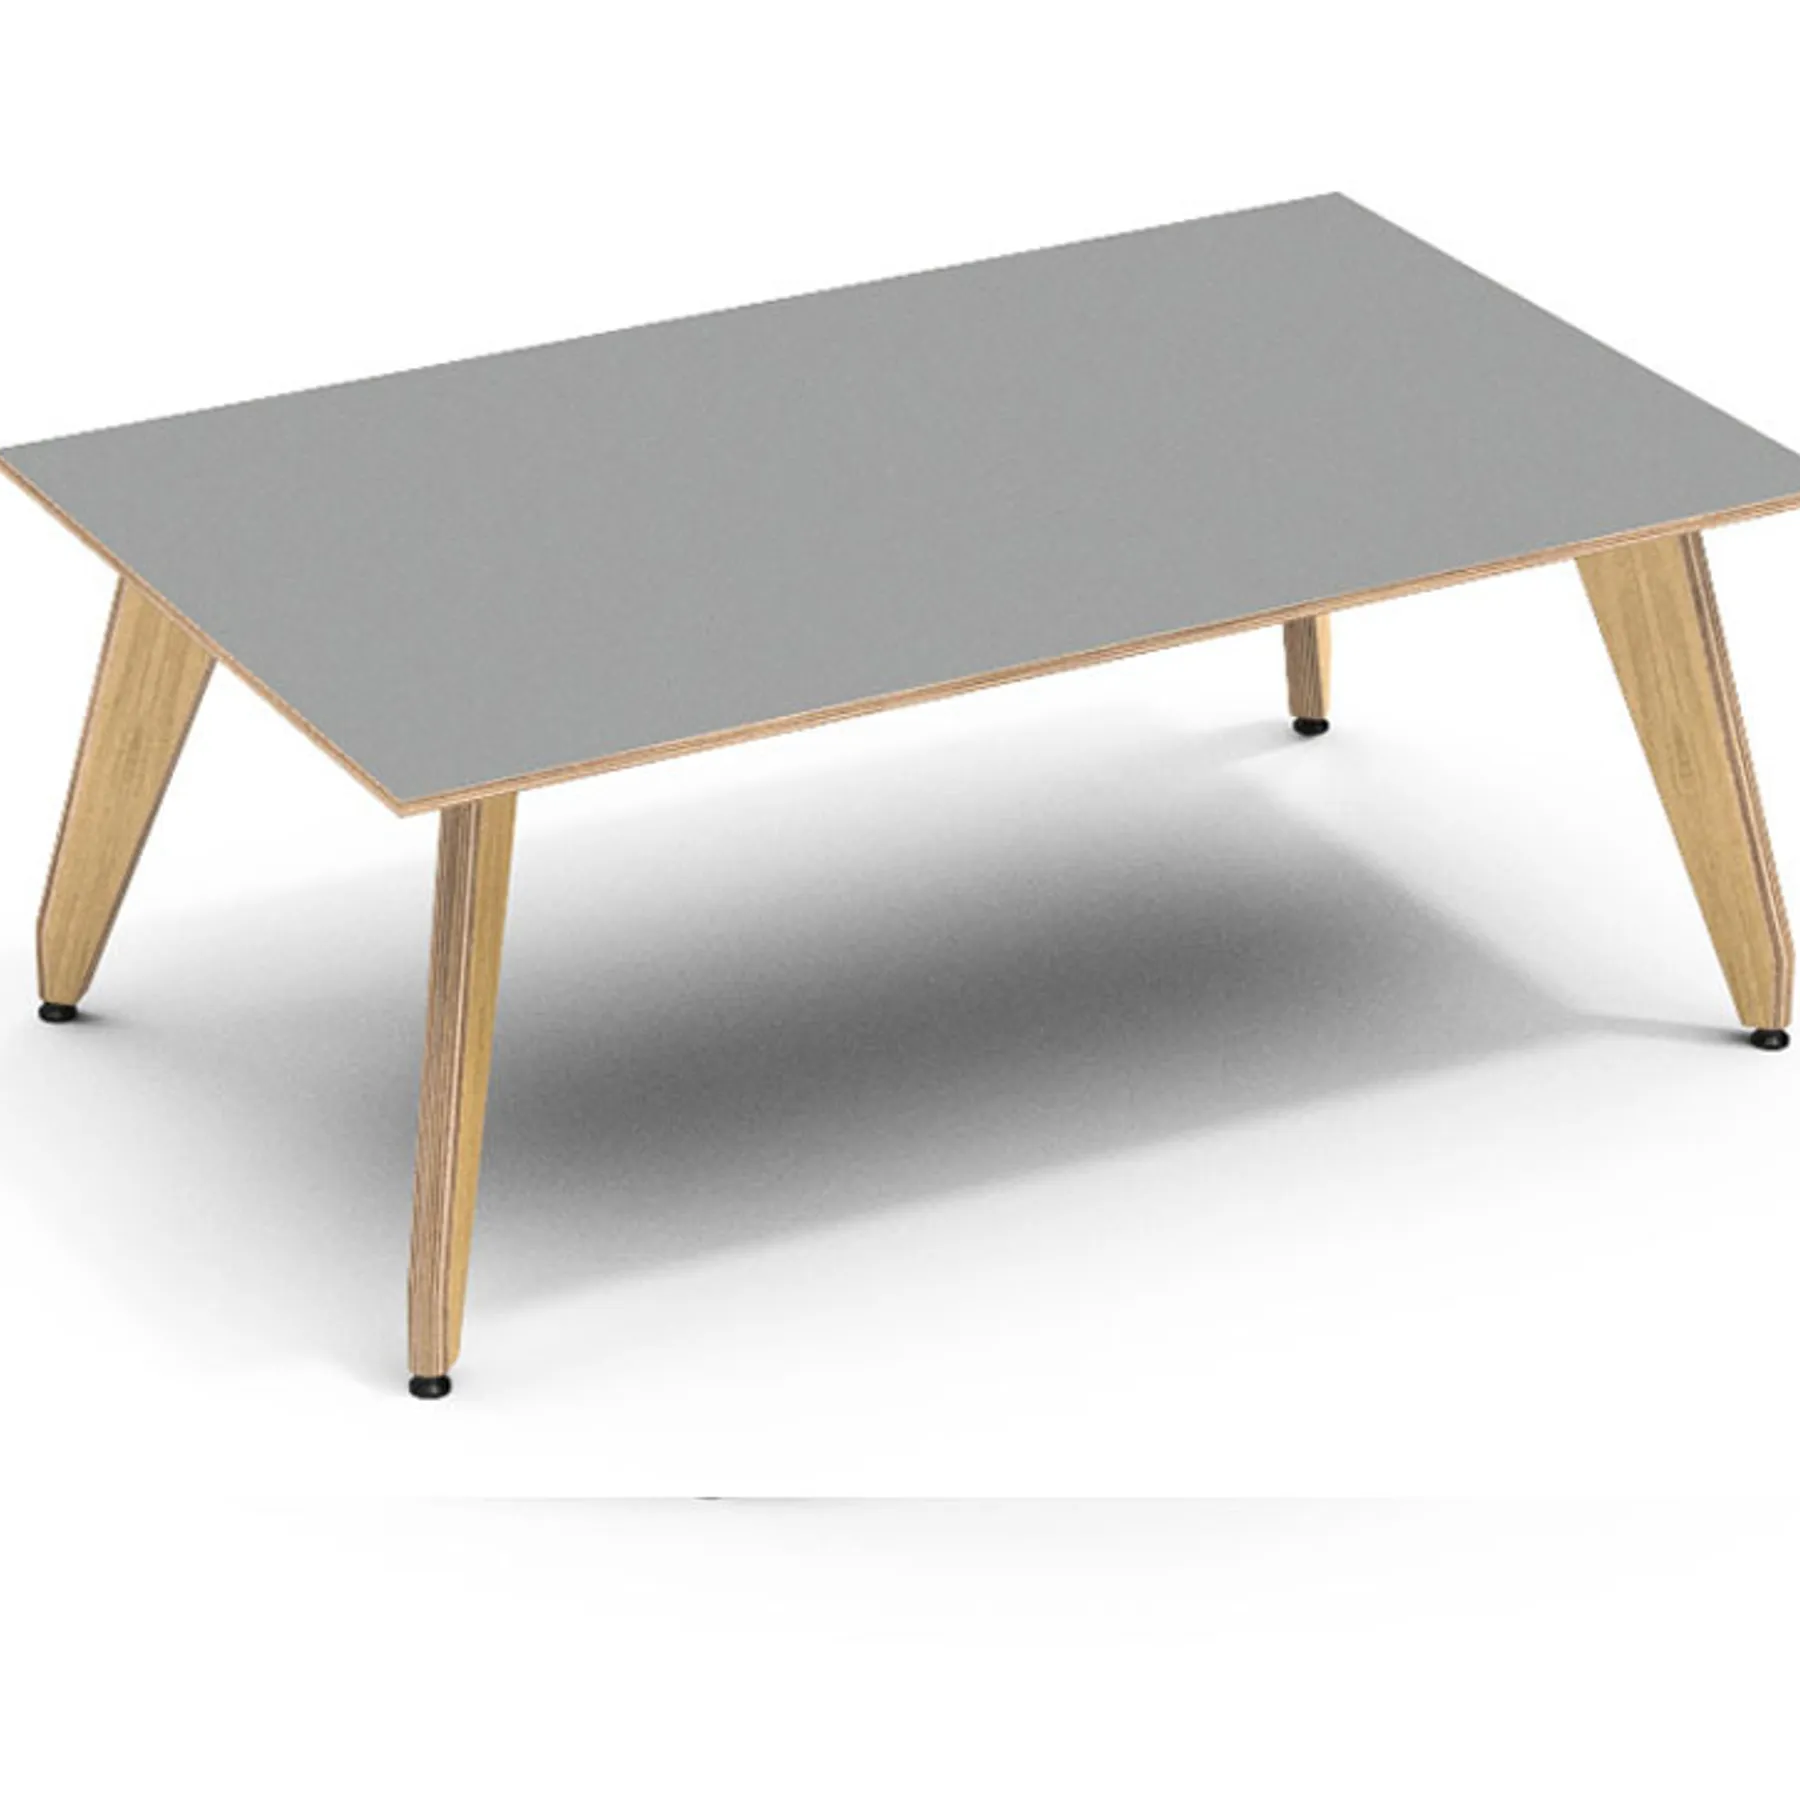 LOF Direct Sven Christensen ligni coffee table rectangular